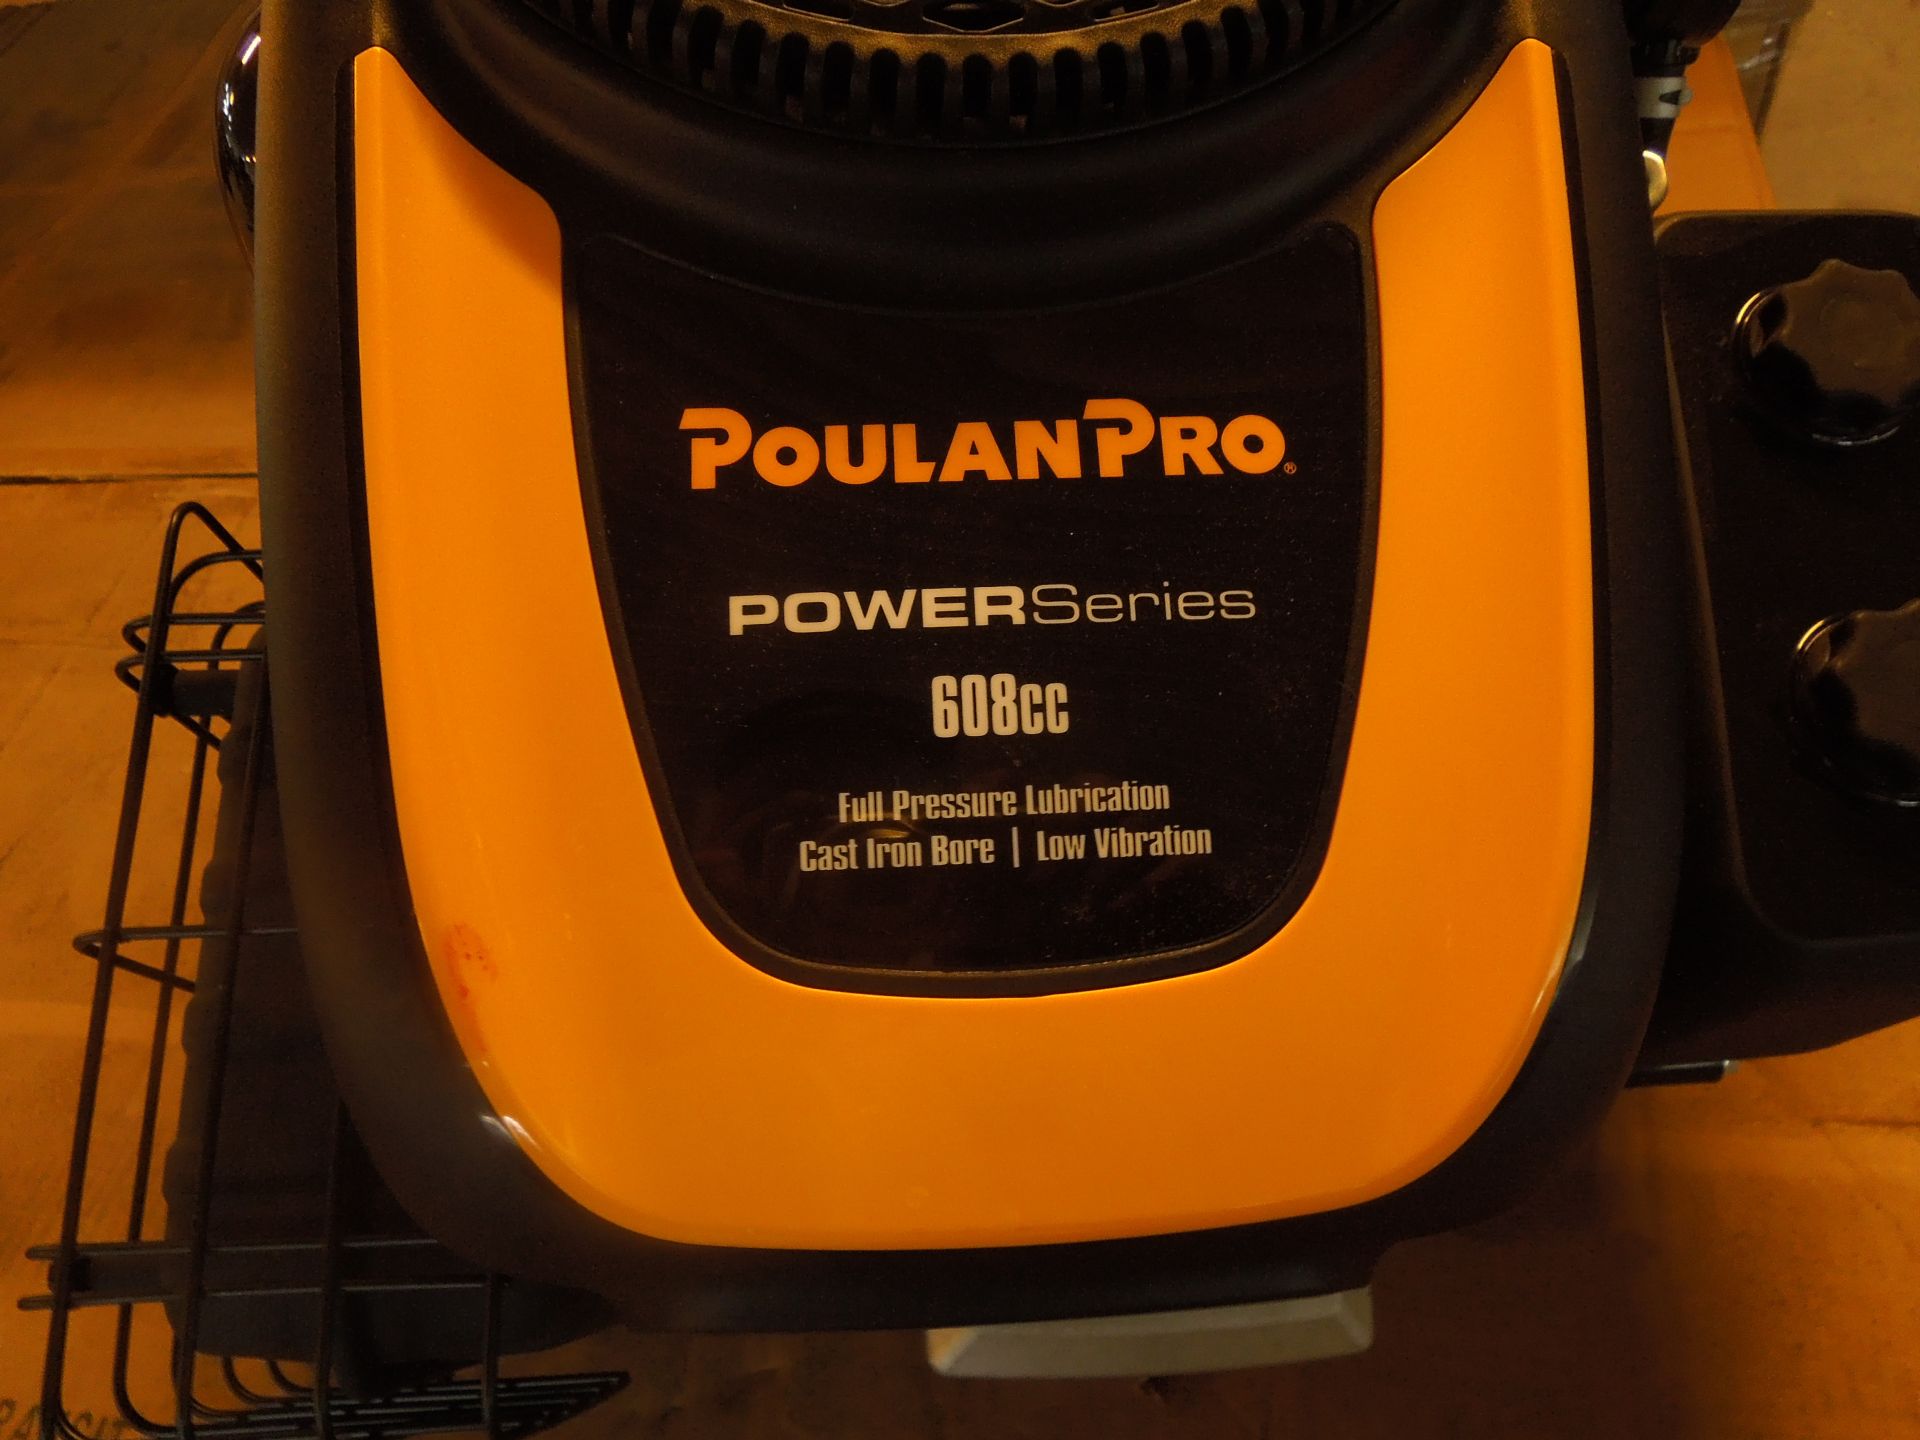 Poulan Pro Power Serie 608ccm 19,5 PS OHV Motor